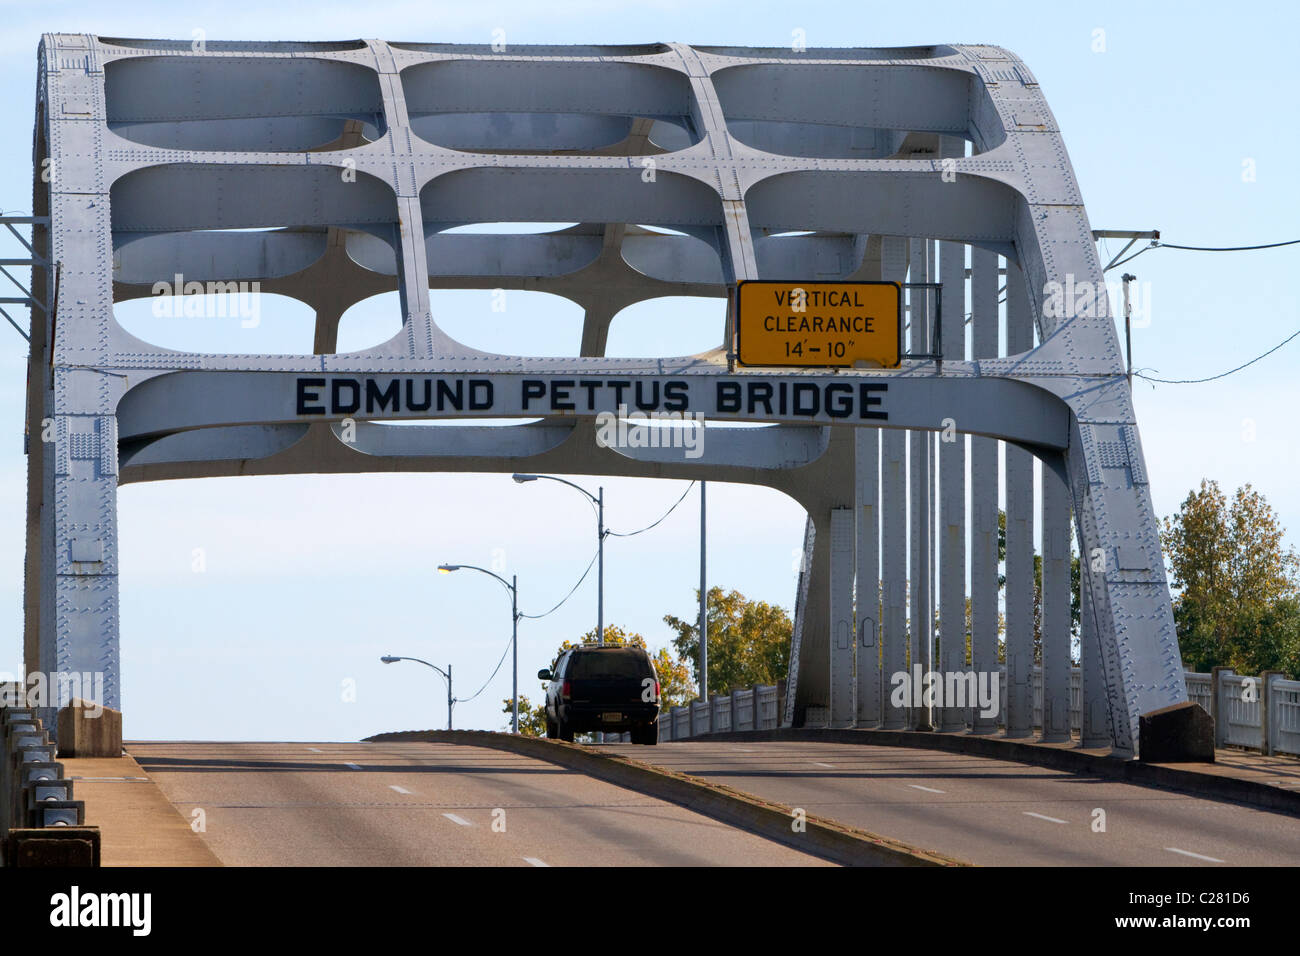 Edmund Pettus Bridge führt U.S. Highway 80 über den Alabama River in Selma, Alabama, USA. Stockfoto